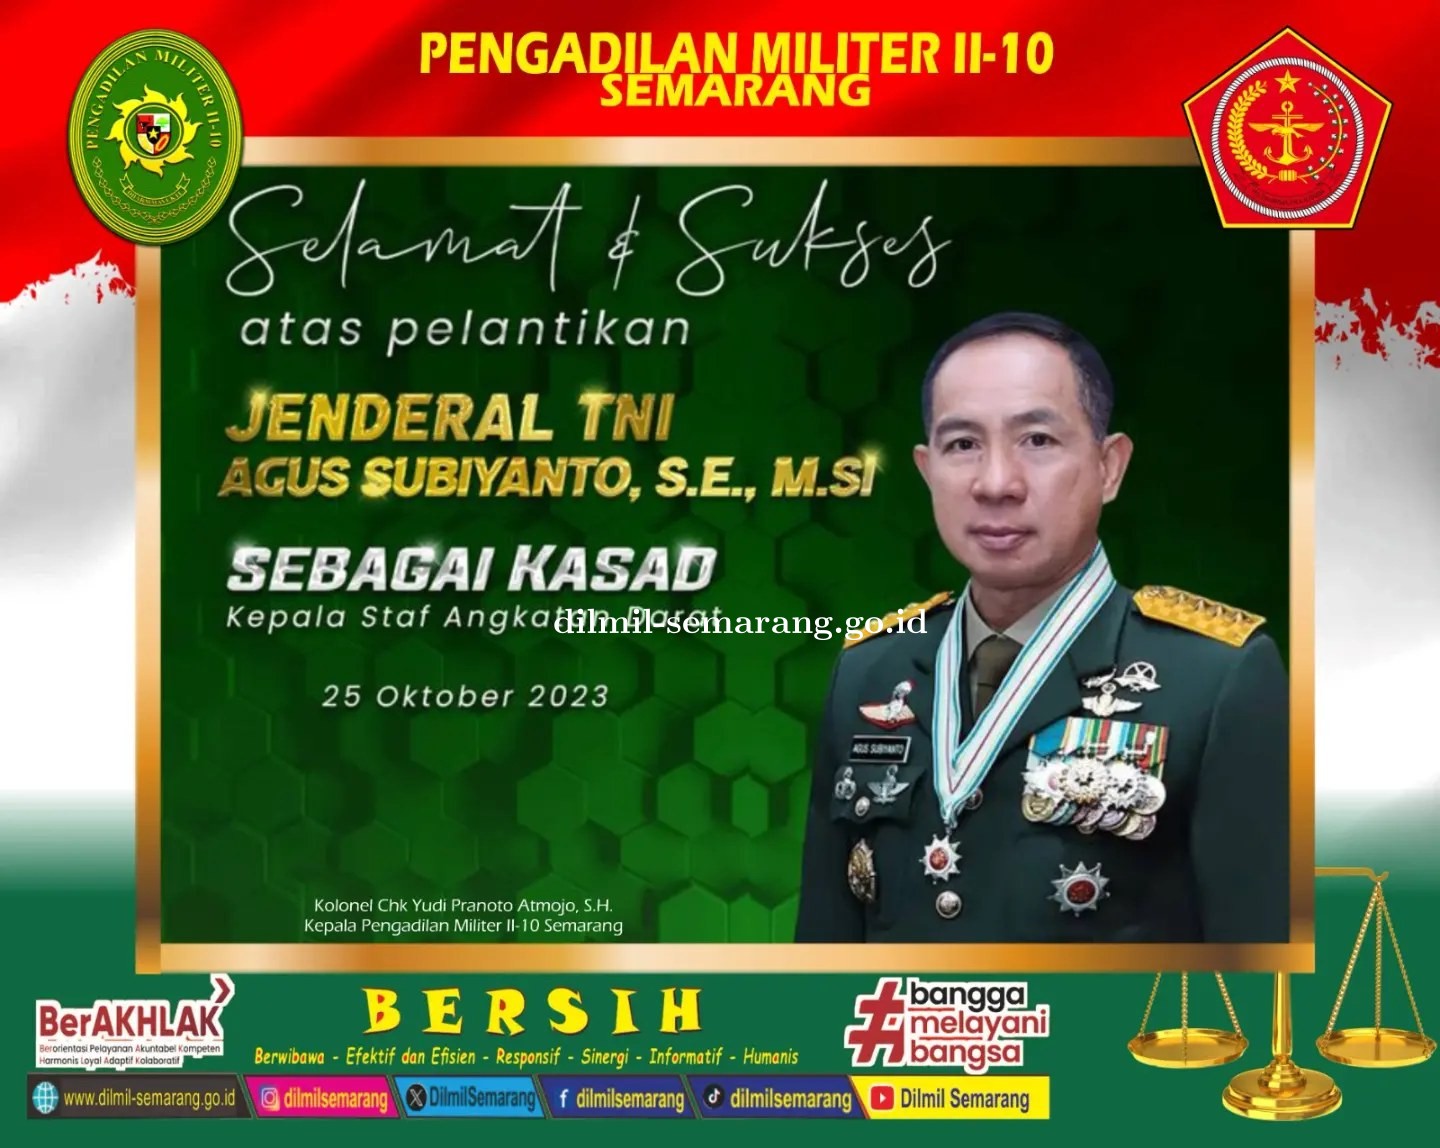 Pelantikan Jenderal TNI Agus Subiyanto, S.E., M.Si. sebagai Kepala Staf Angkatan Darat